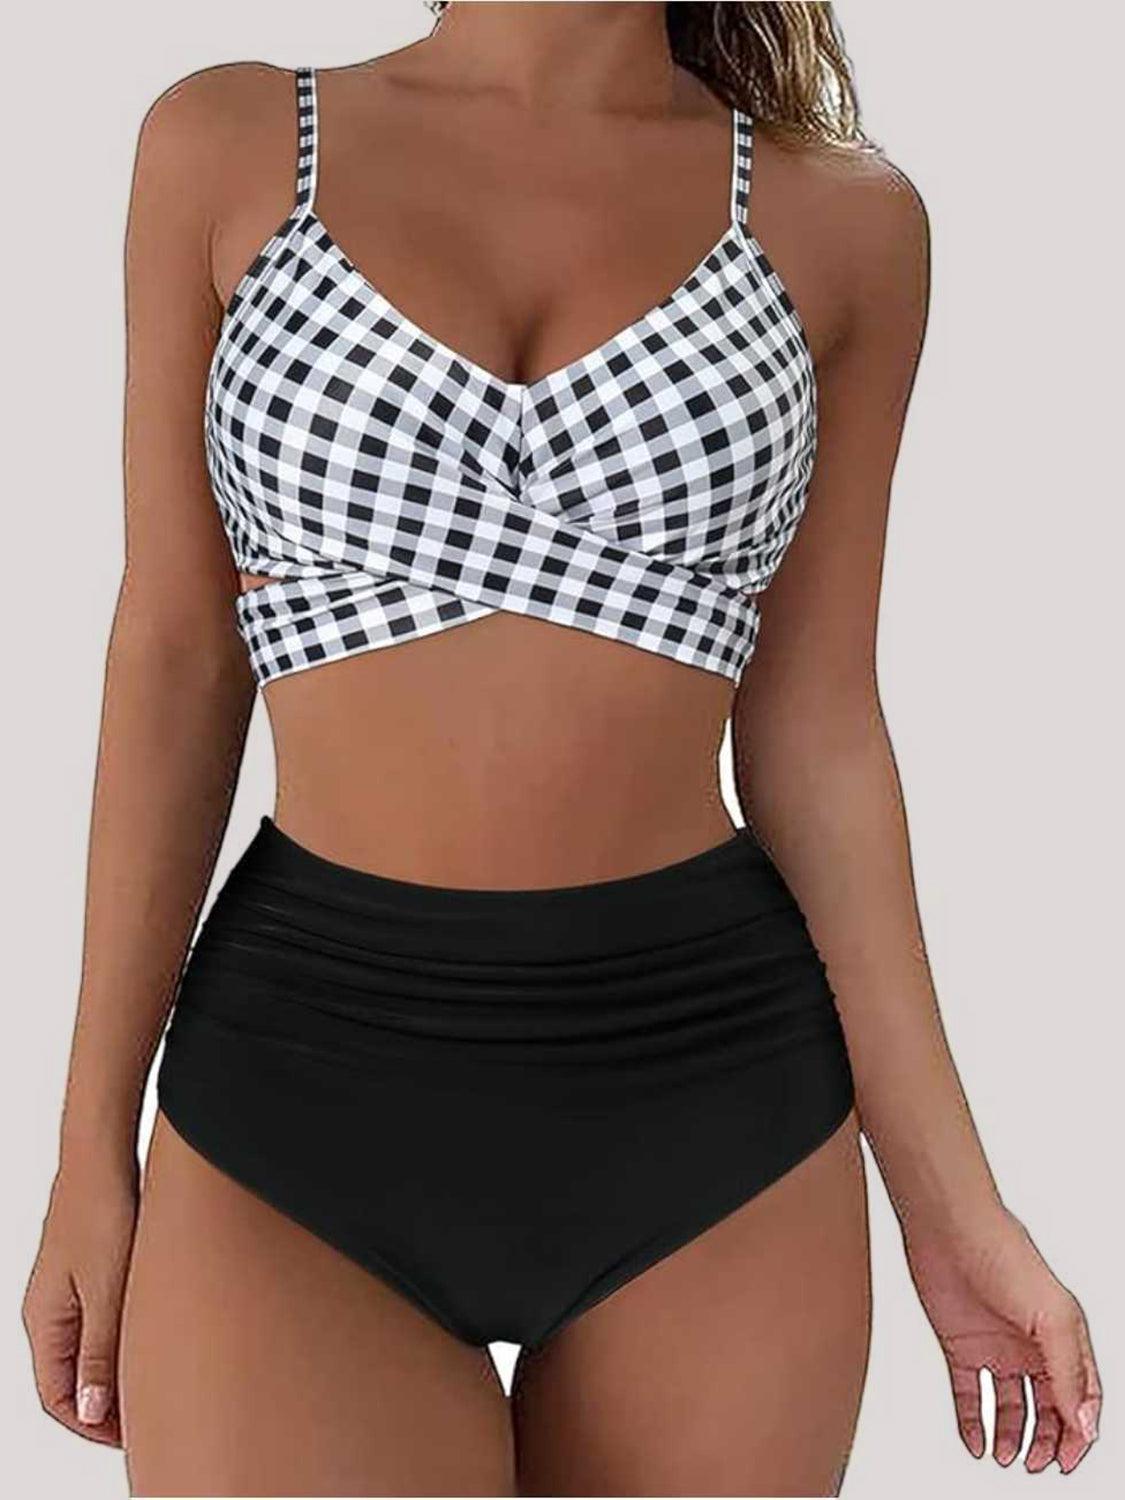 a woman wearing a black and white checkered bikini top